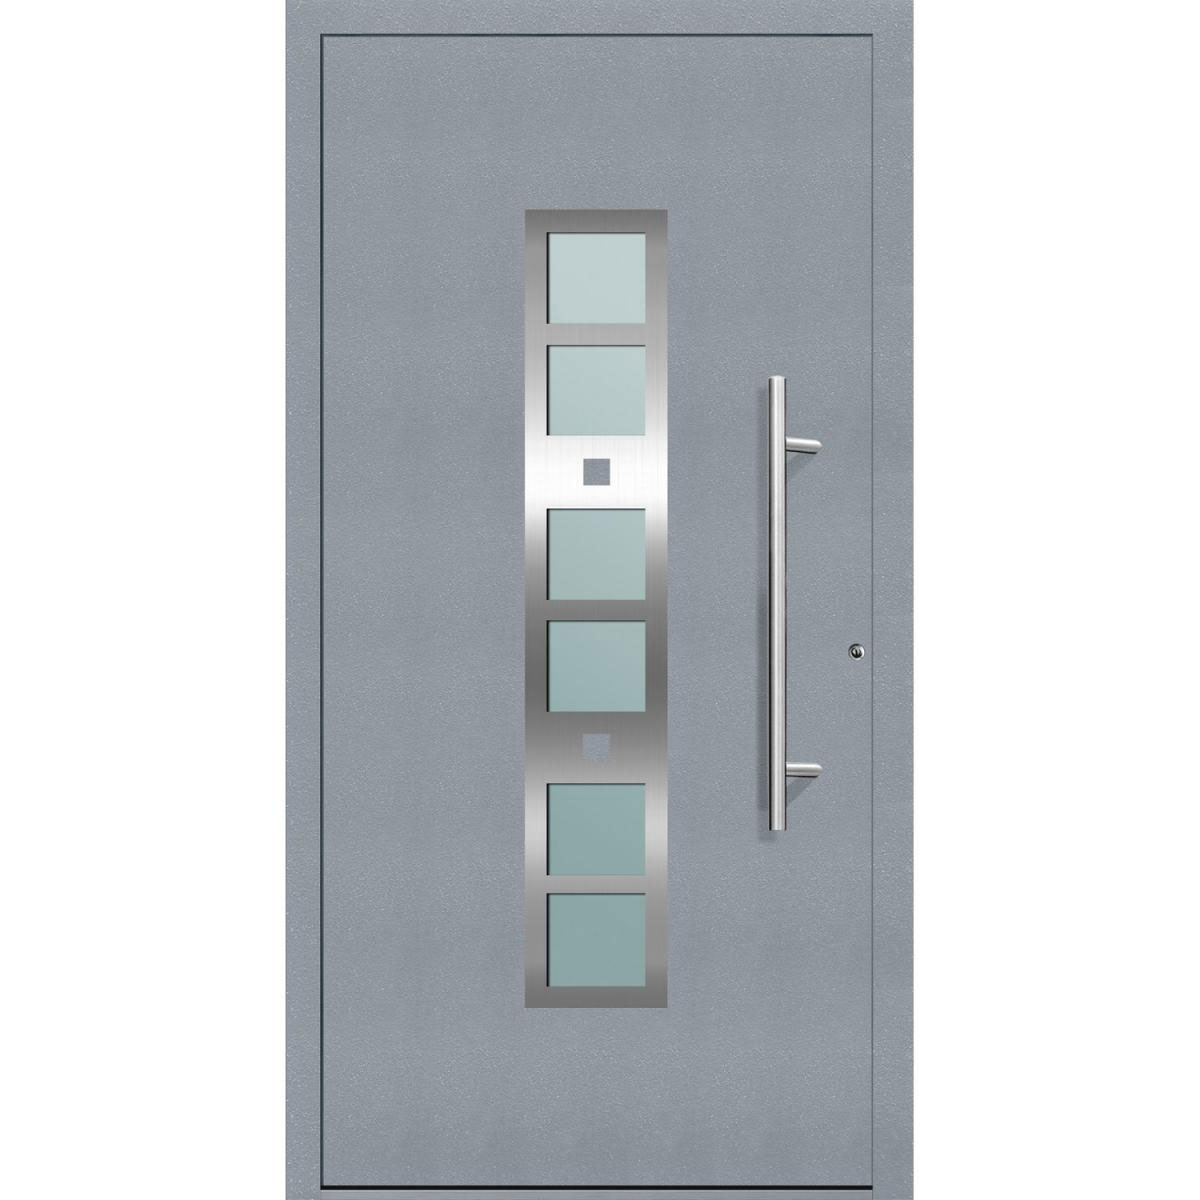 Aluminium Sicherheits-Haustür „Pisa Exklusiv“, 75mm, grau, 100x210 cm, Anschlag rechts, inkl. Griffset